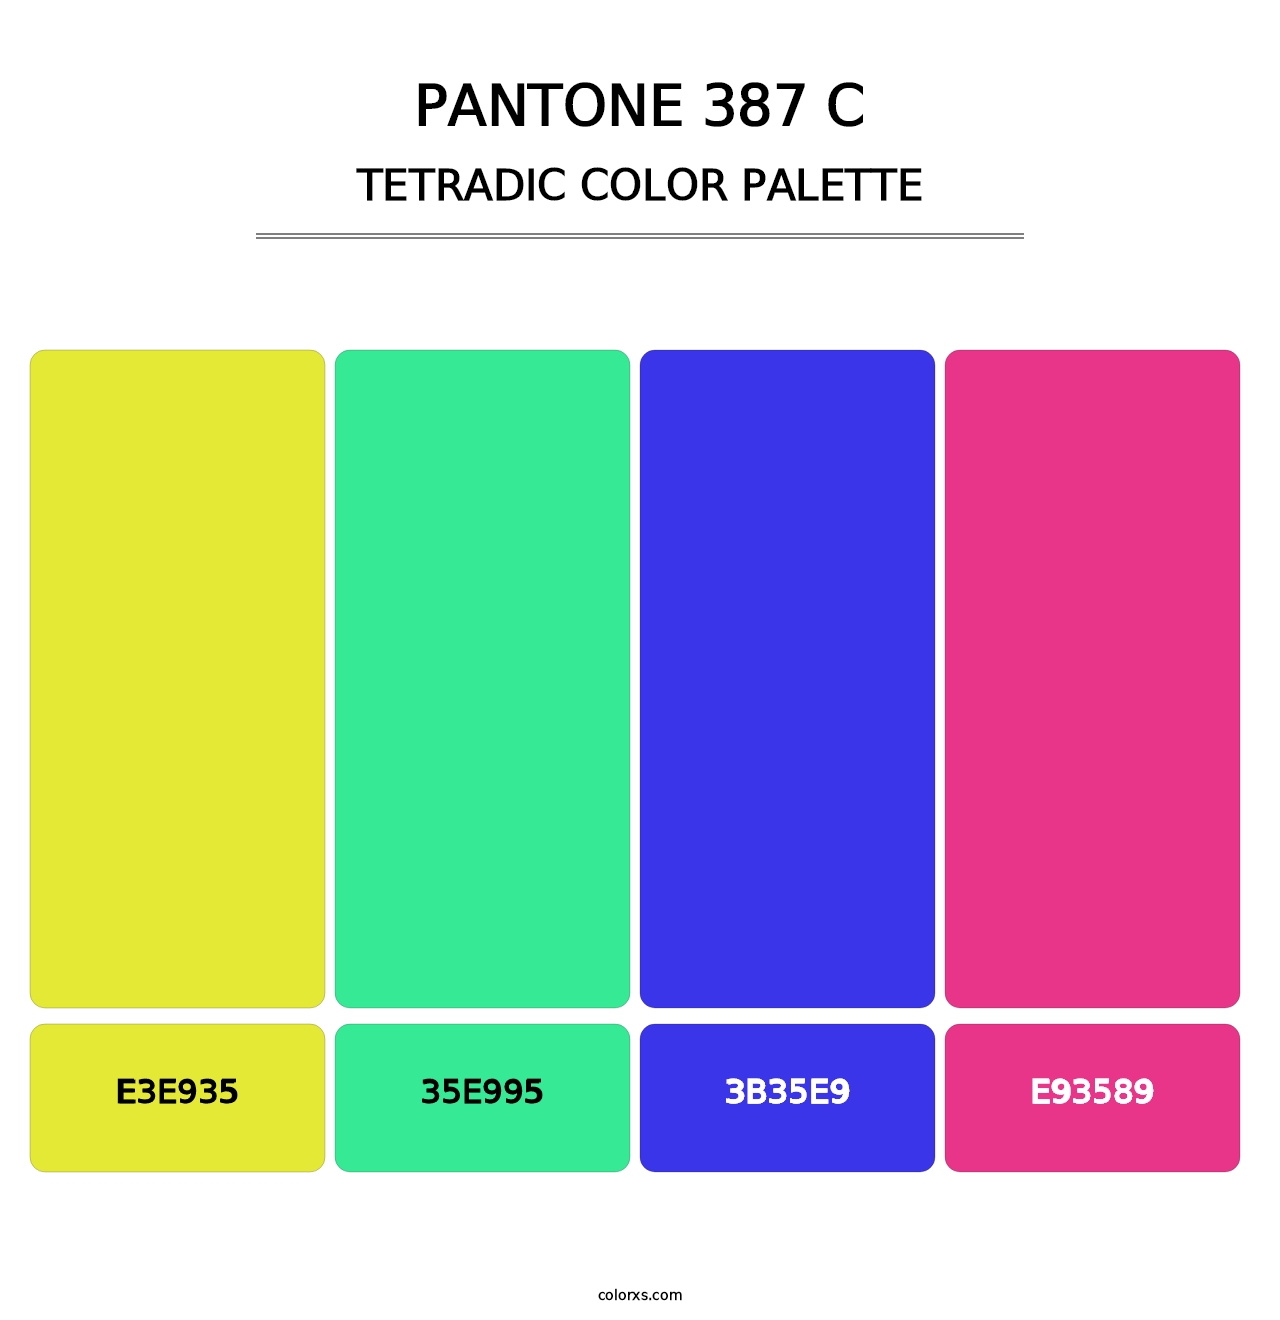 PANTONE 387 C - Tetradic Color Palette